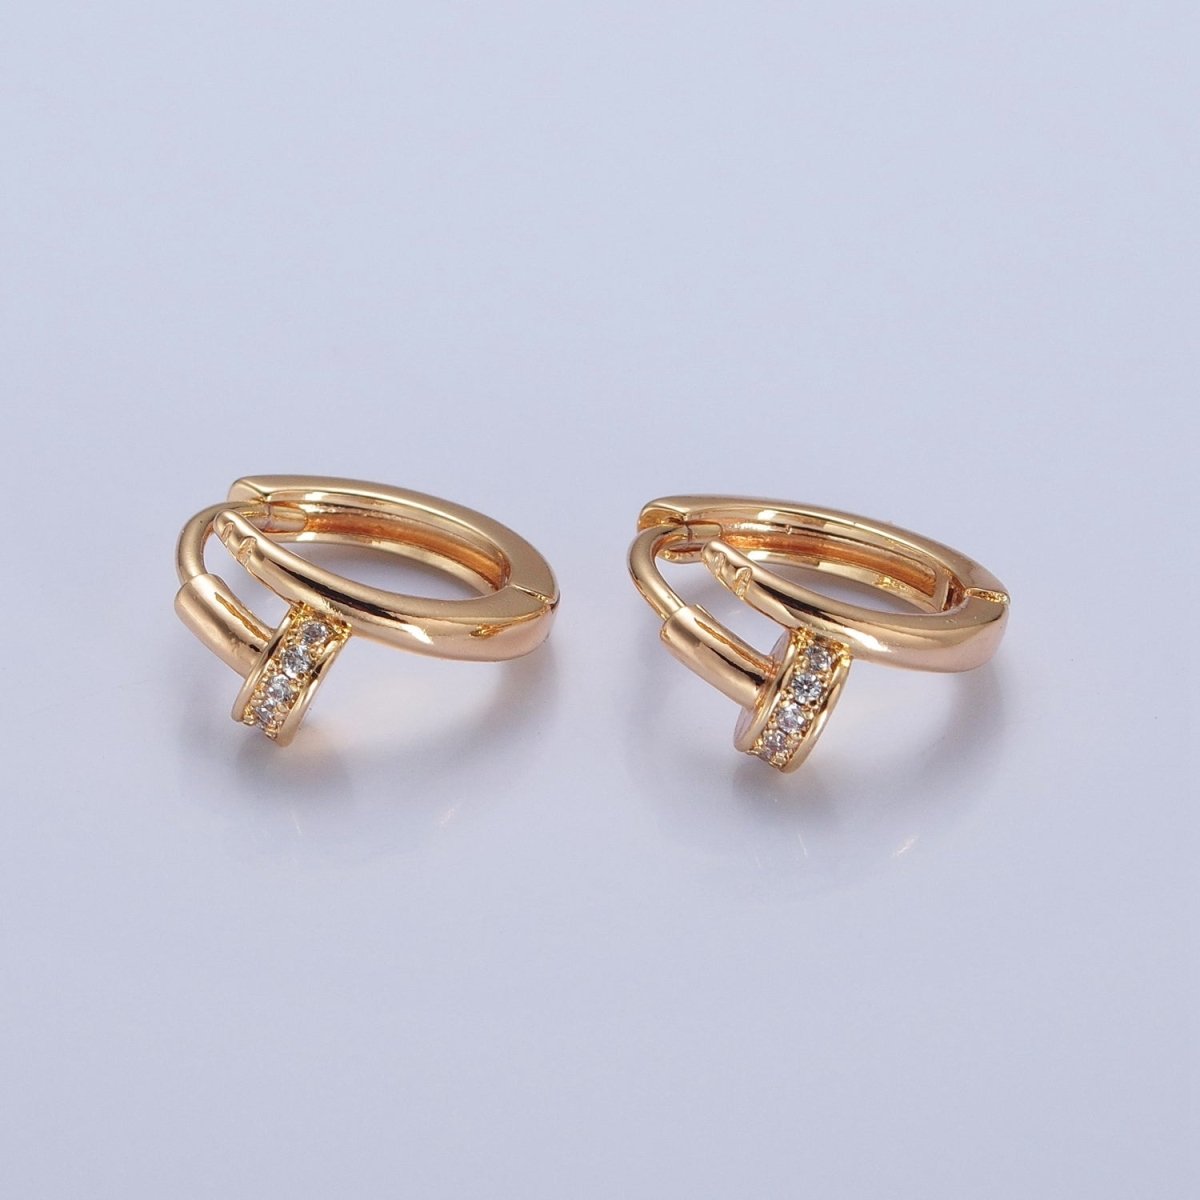 Gold Filled Spiral Nail Earring Lever Back Huggie Earring V-434 - DLUXCA